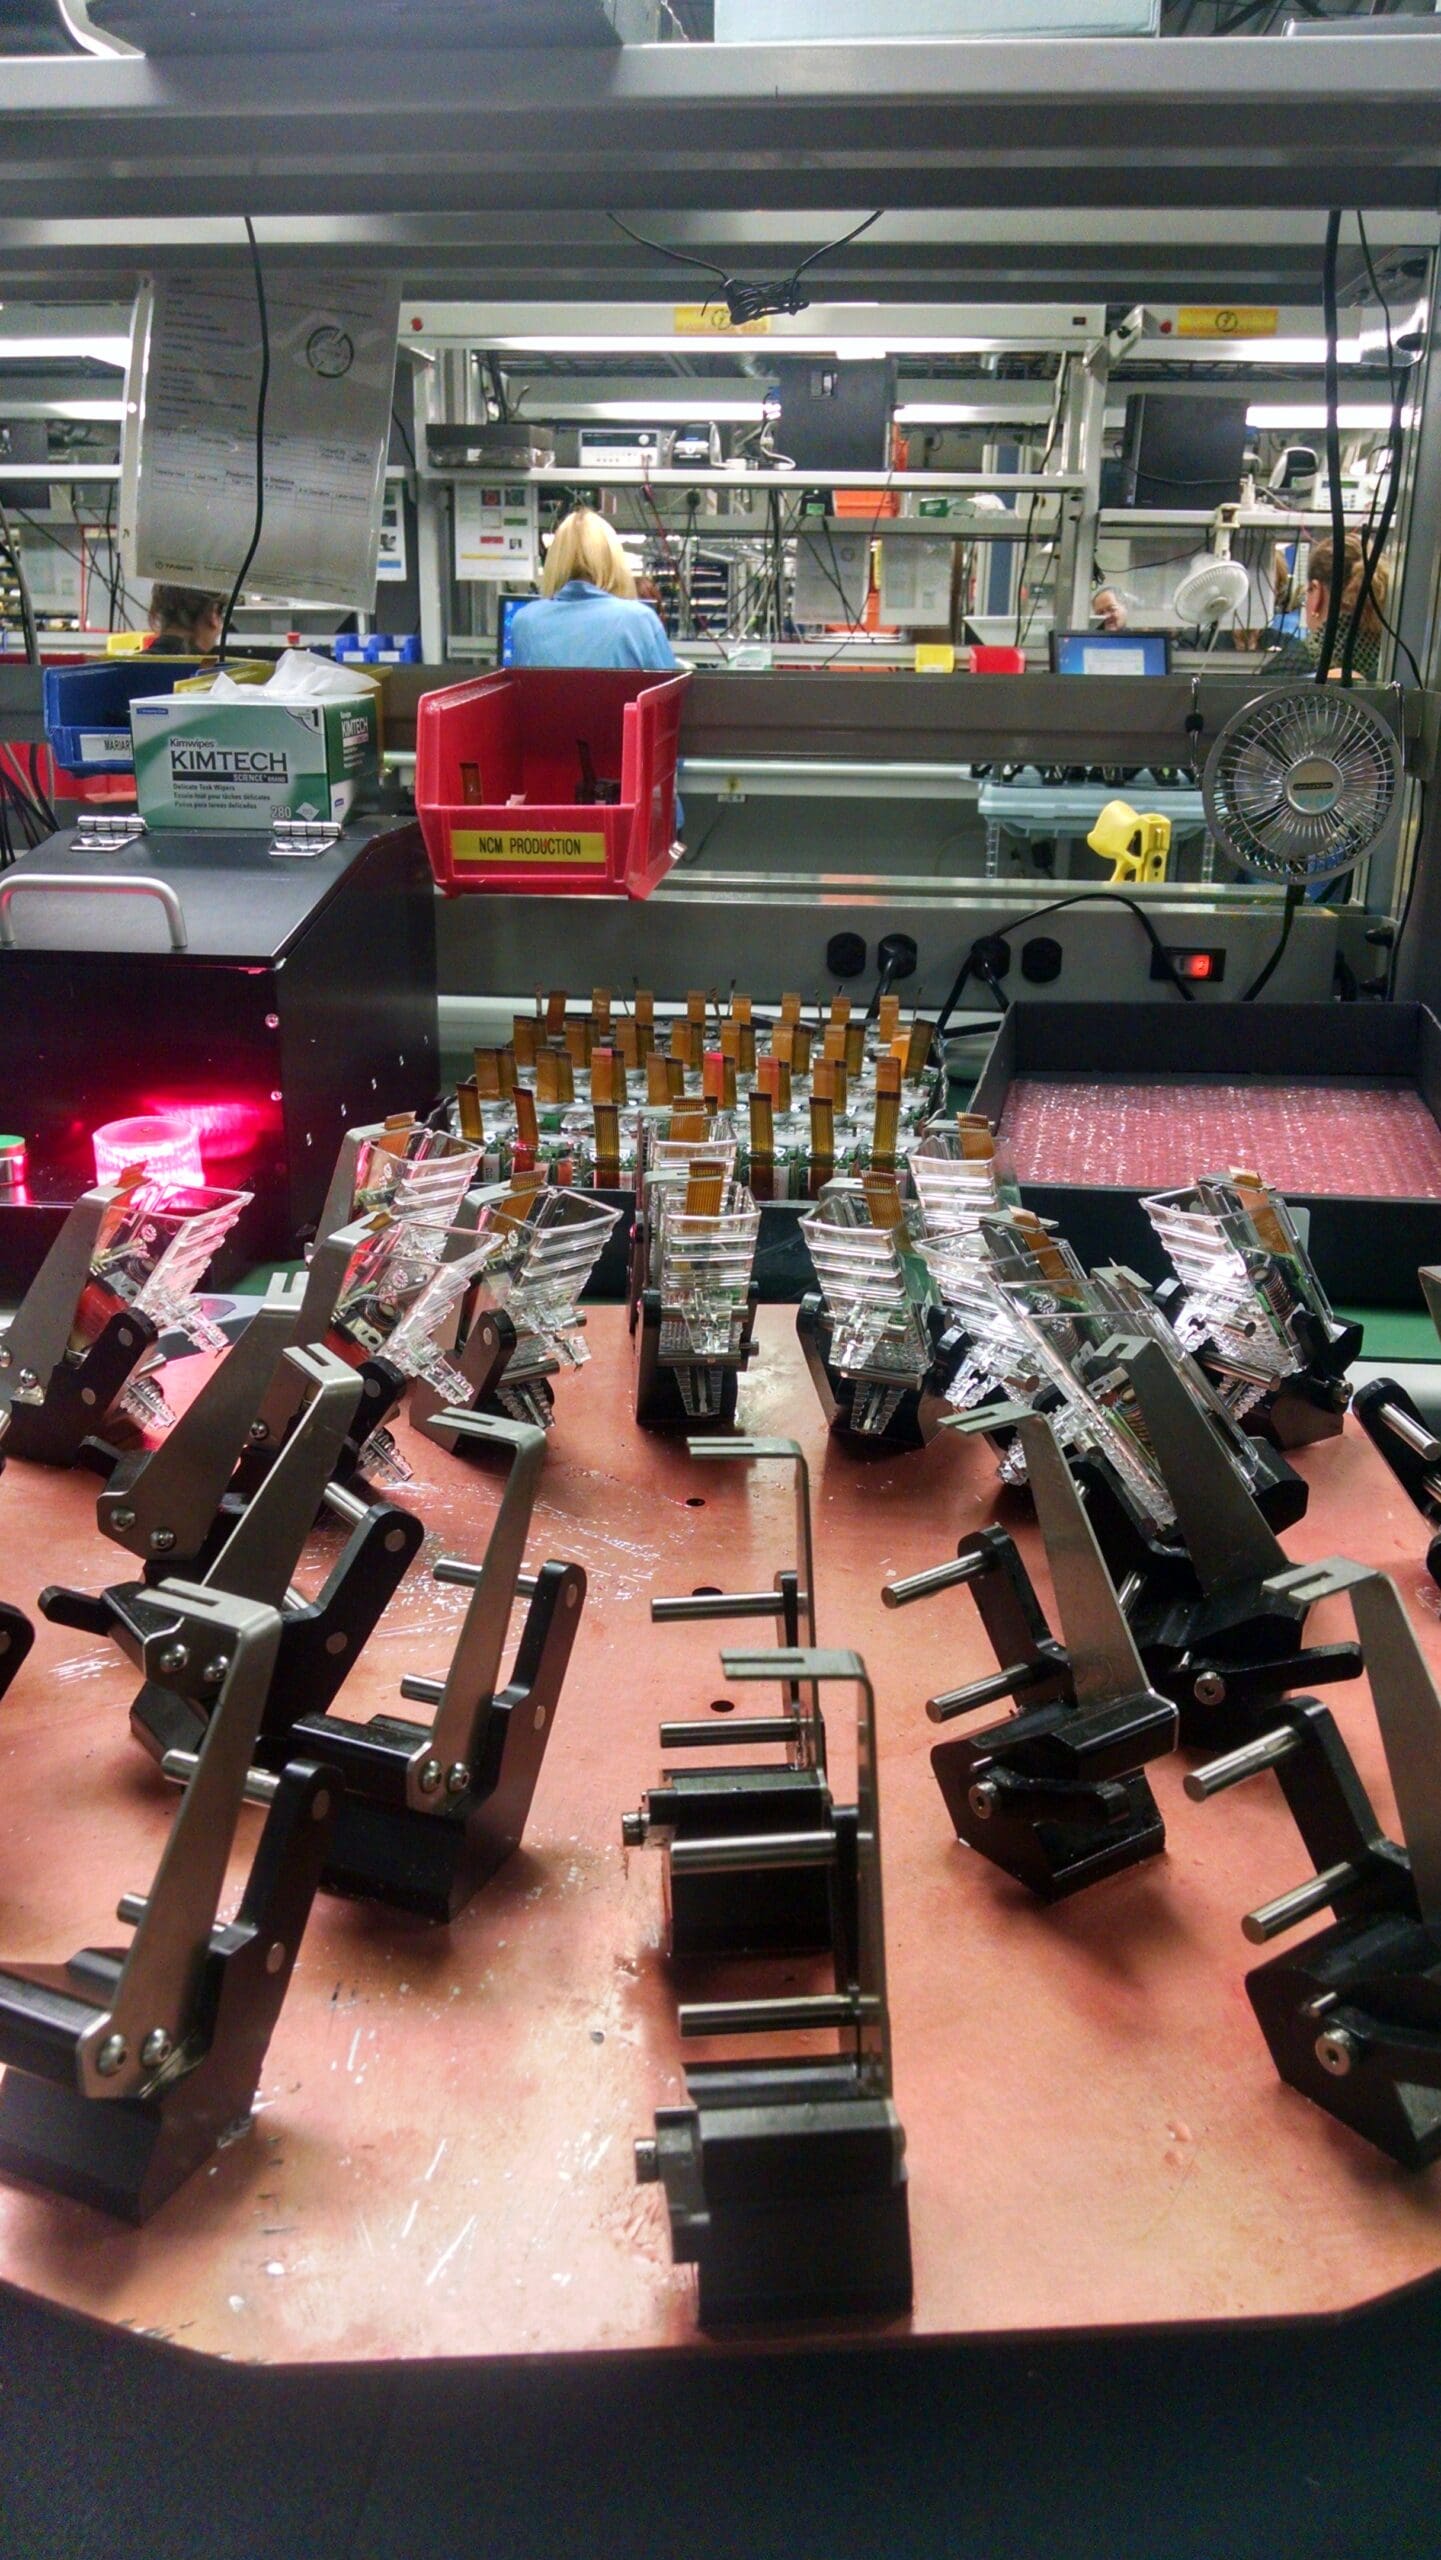 TASER assembly line (courtesy Josh Wayner)